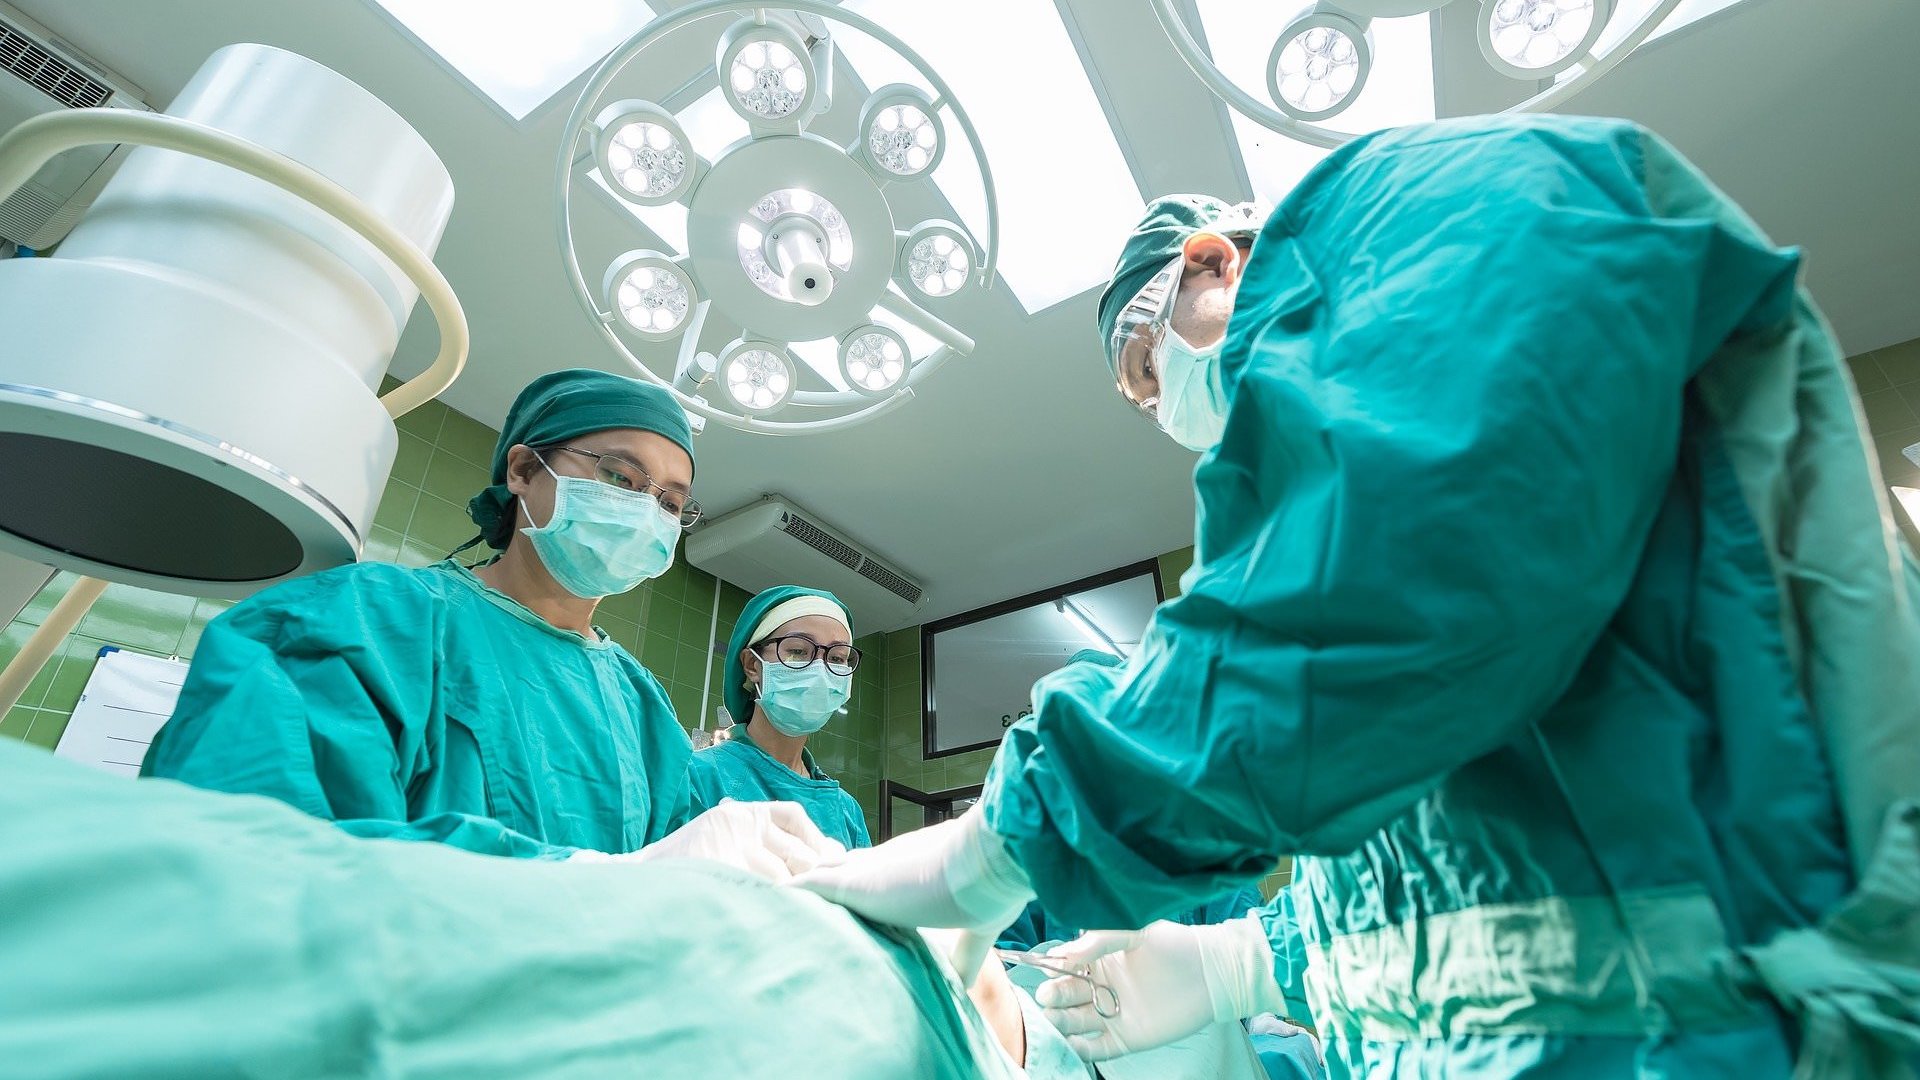 hirurzi hirurgija foto Pixabay.jpeg